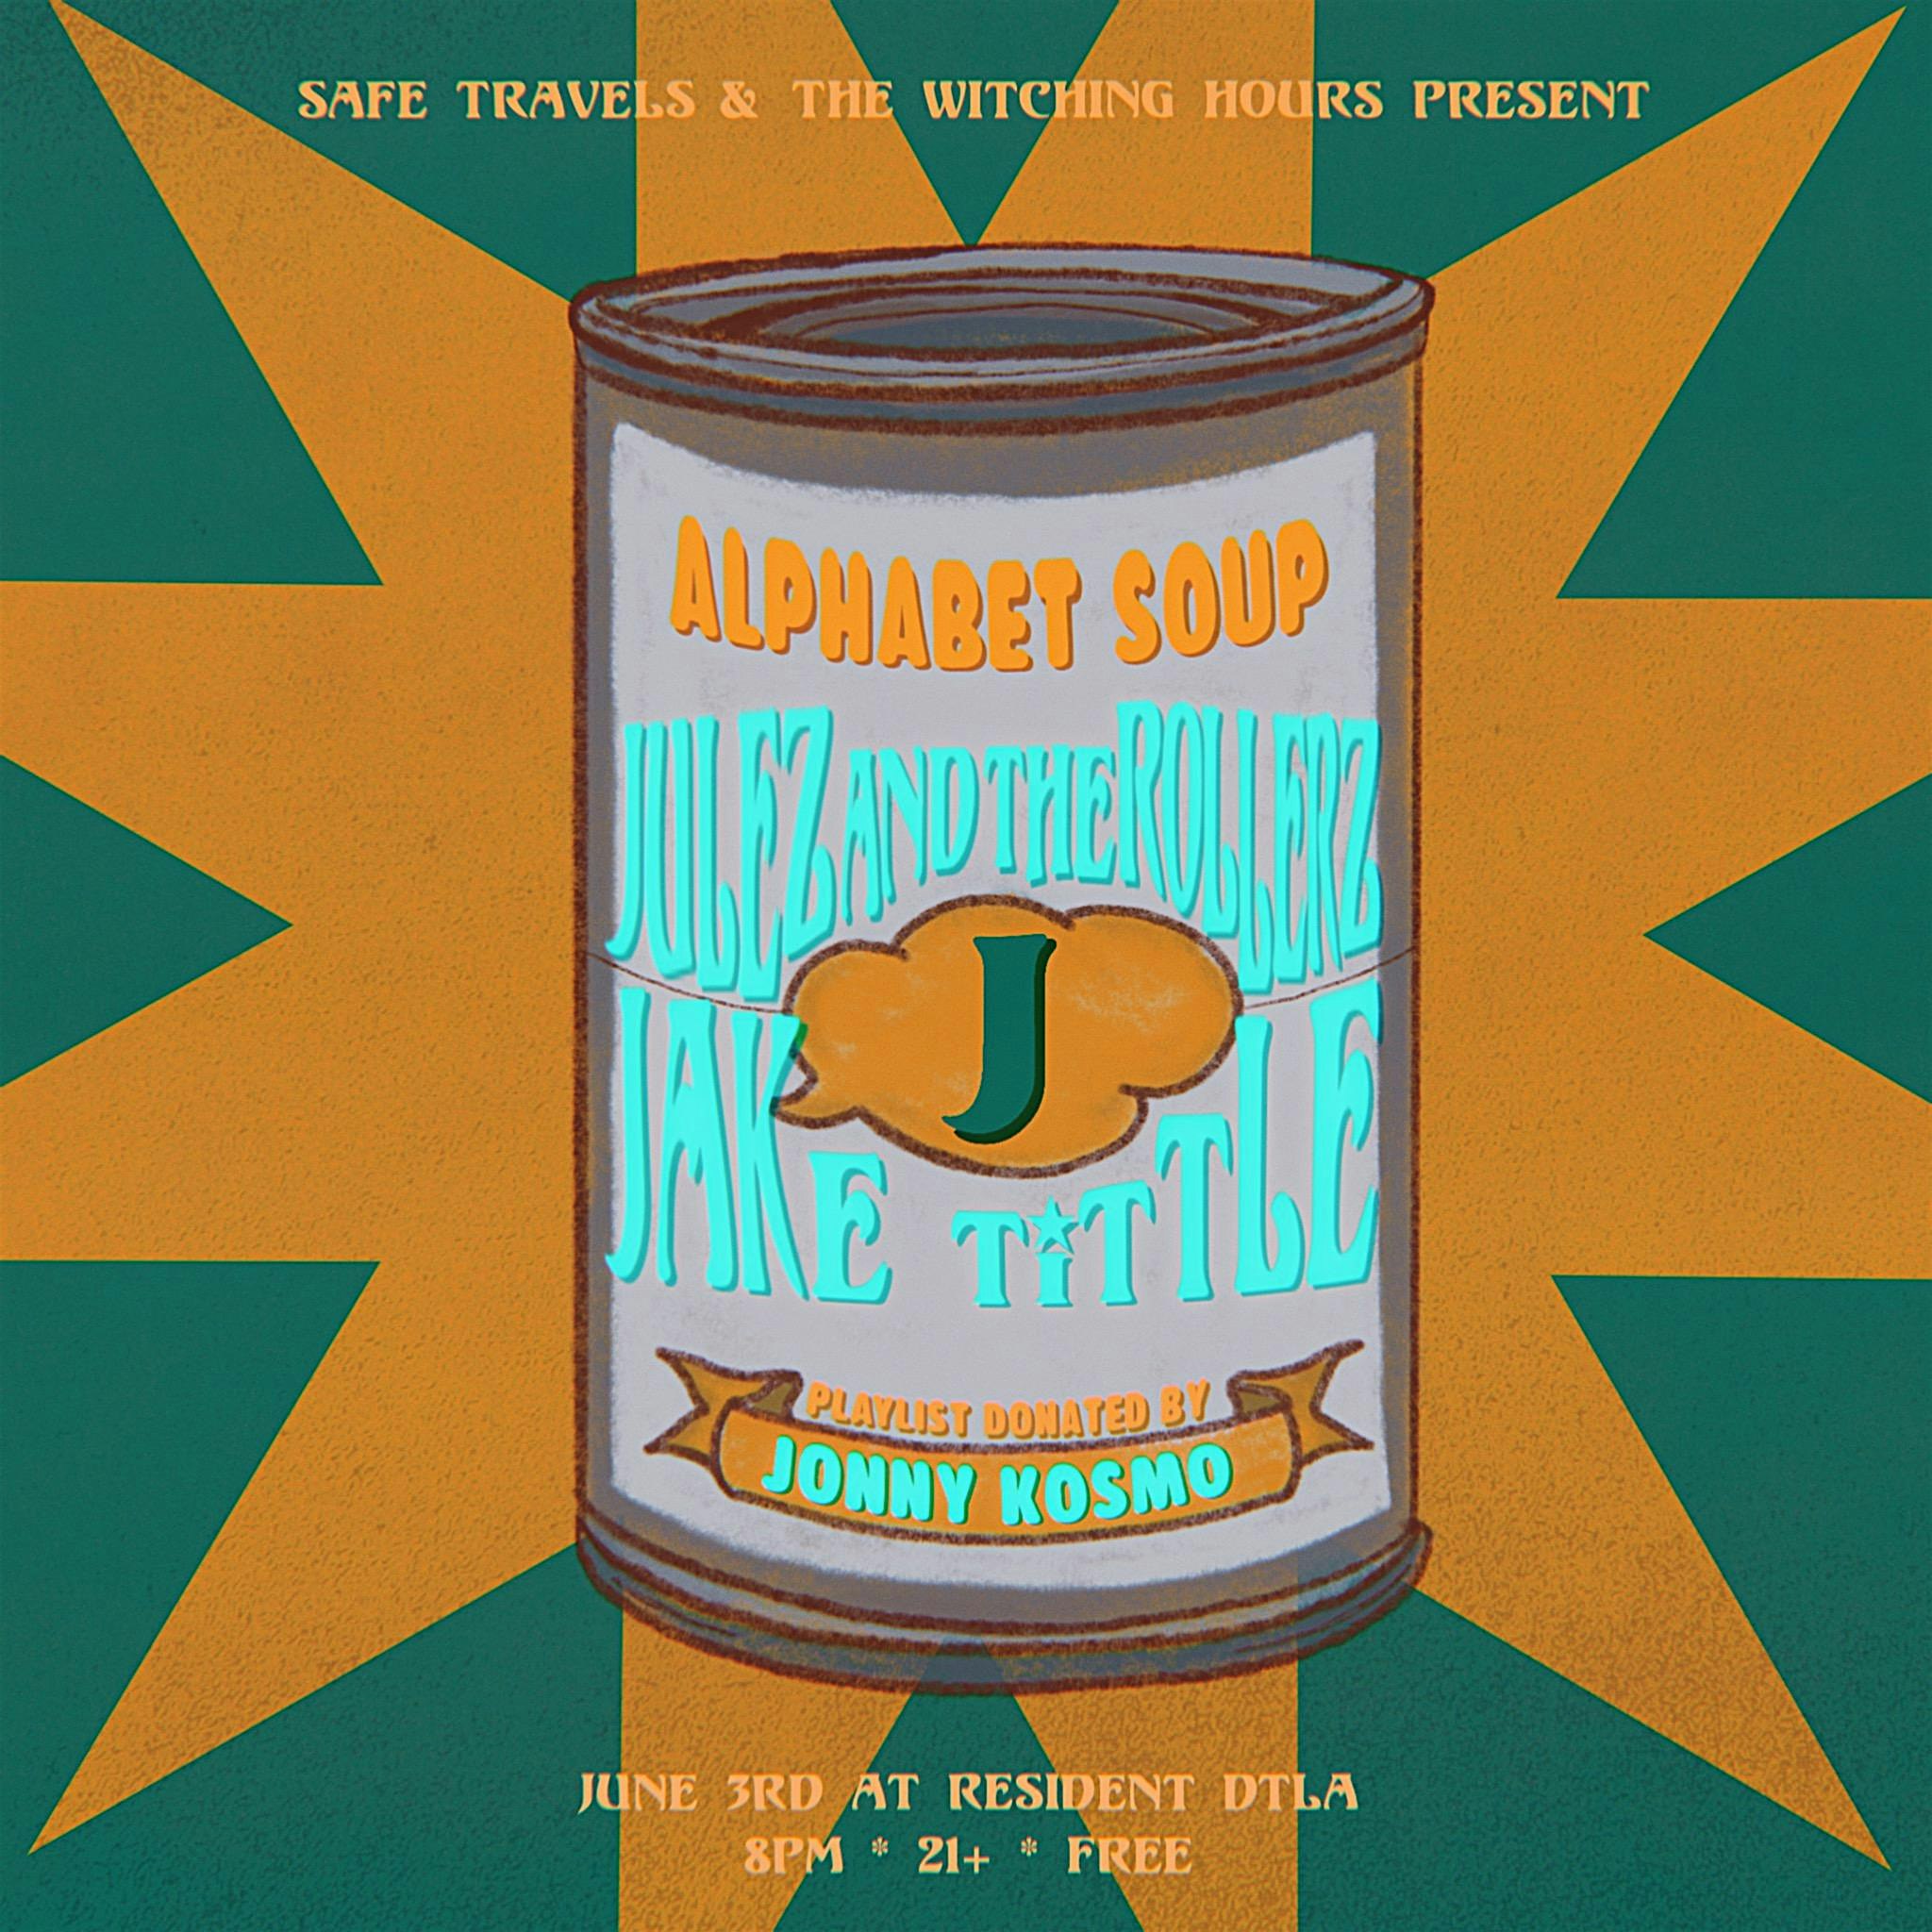 Alphabet Soup: Julez & the Rollers, Jake Tittle & Jonny Kosmo (Playlist)